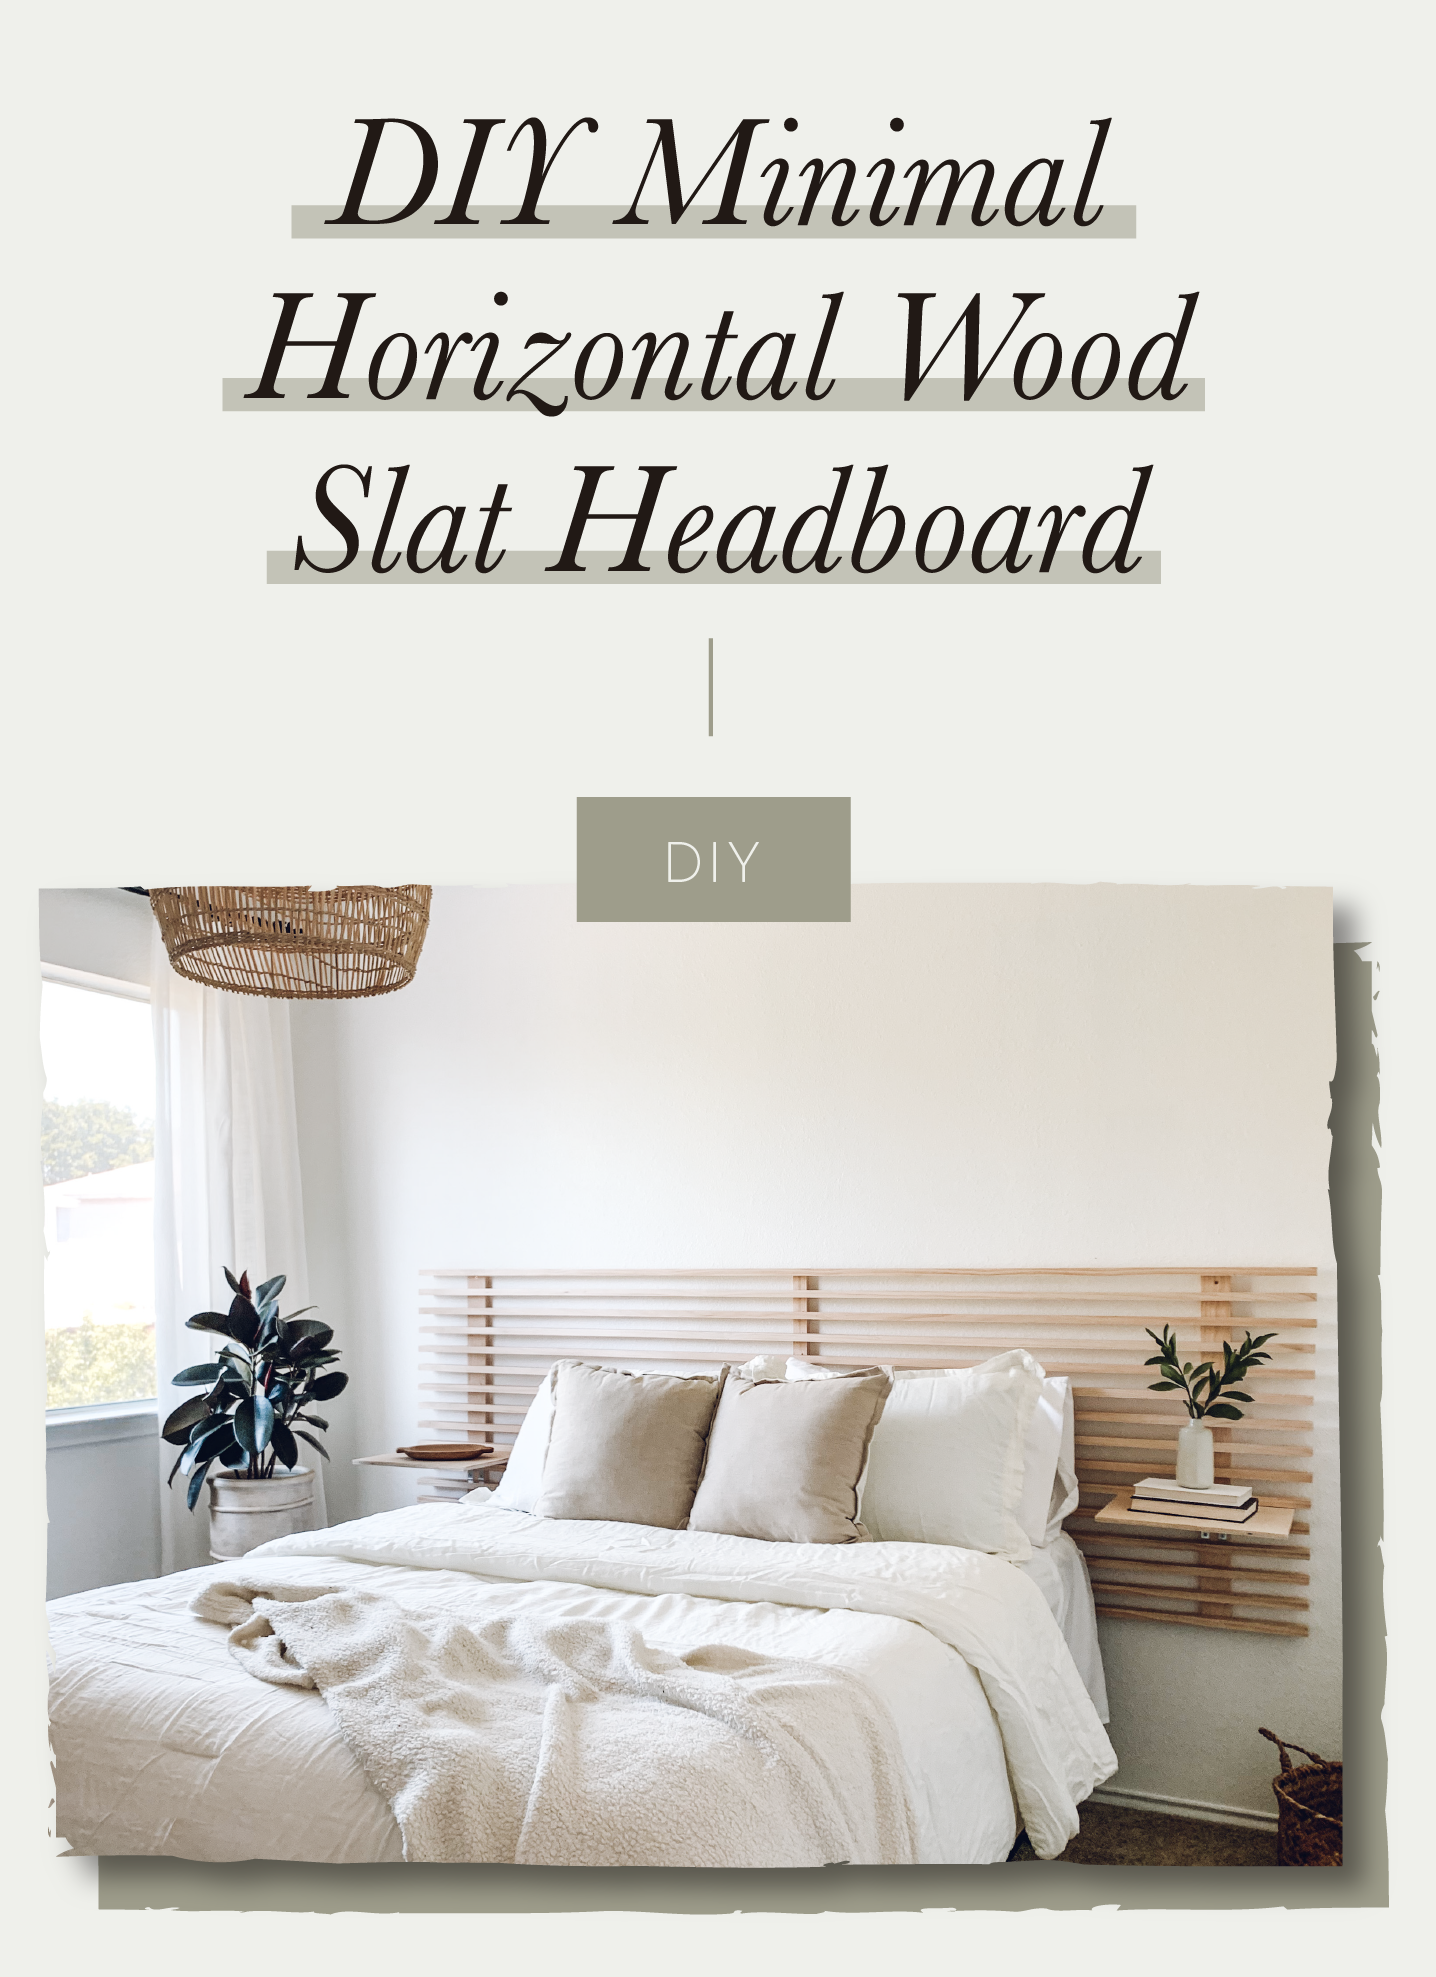 Diy Minimal Horizontal Wood Slat, Headboard With Floating Shelves